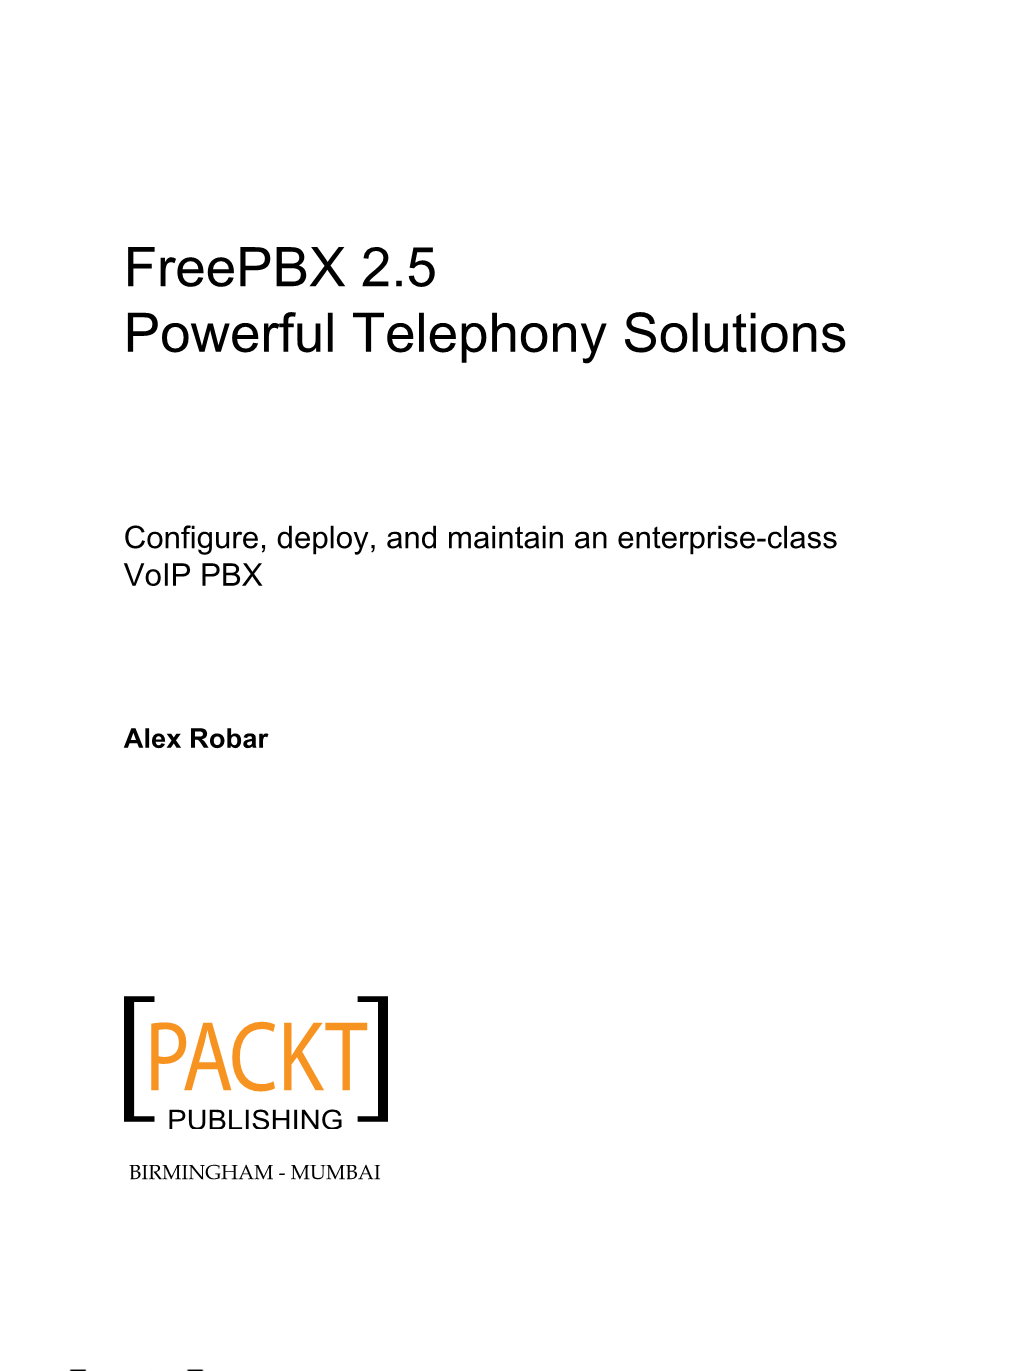 Freepbx 2.5 Powerful Telephony Solutions